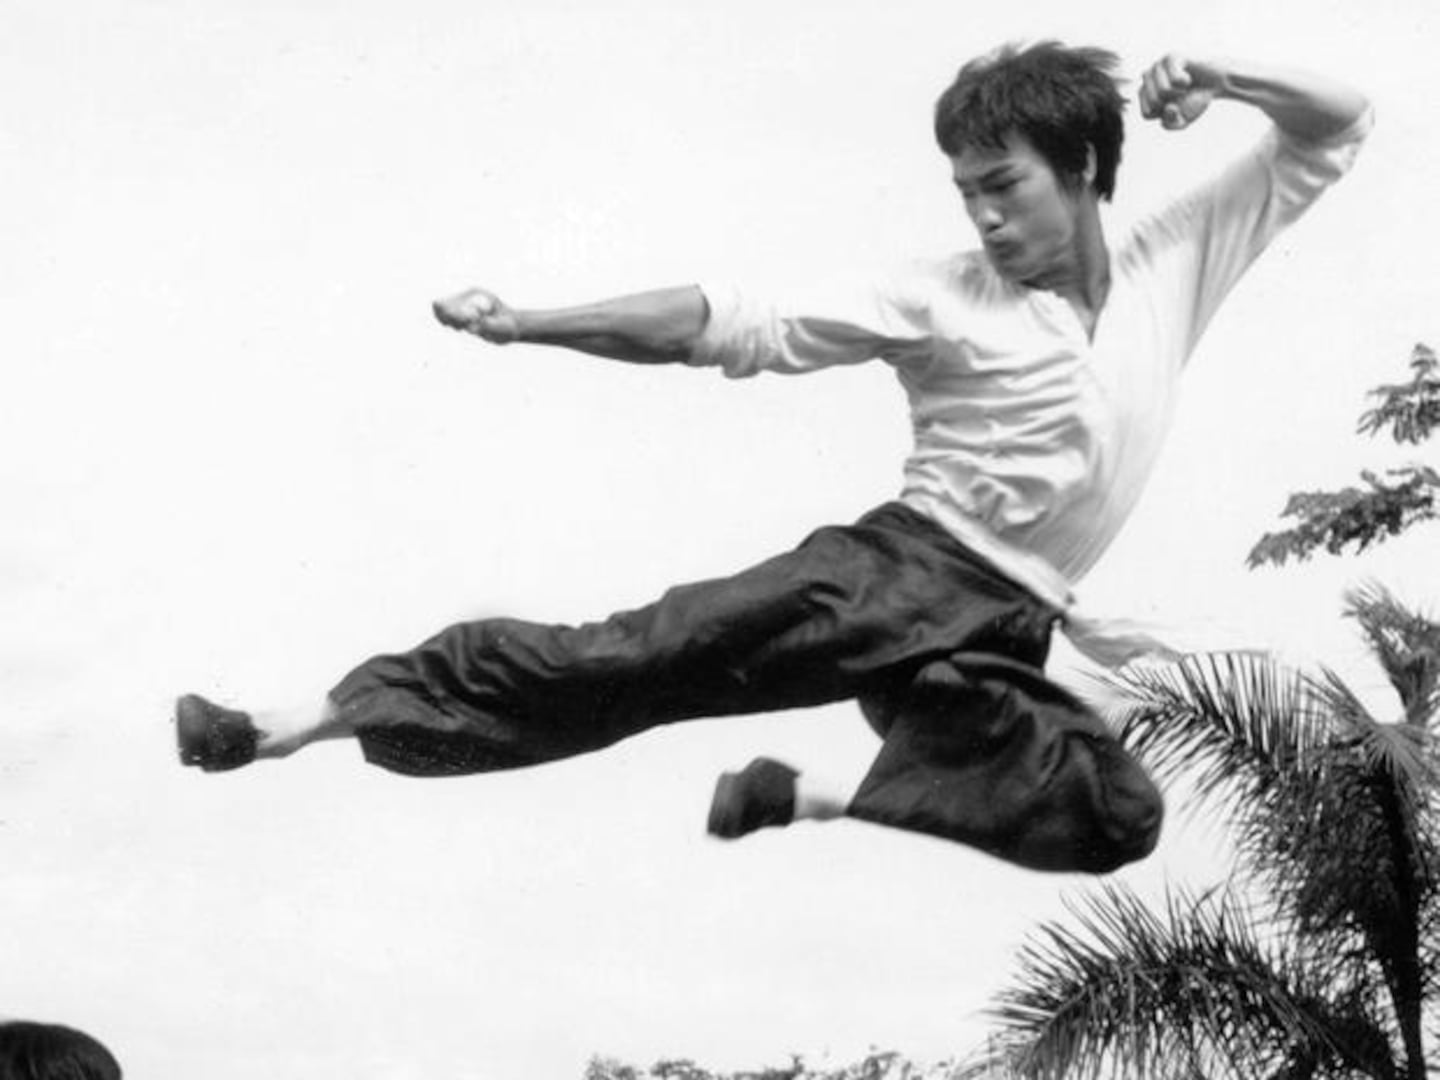 Bruce Lee daba clases de wing chun kung-fú en garajes abandonados